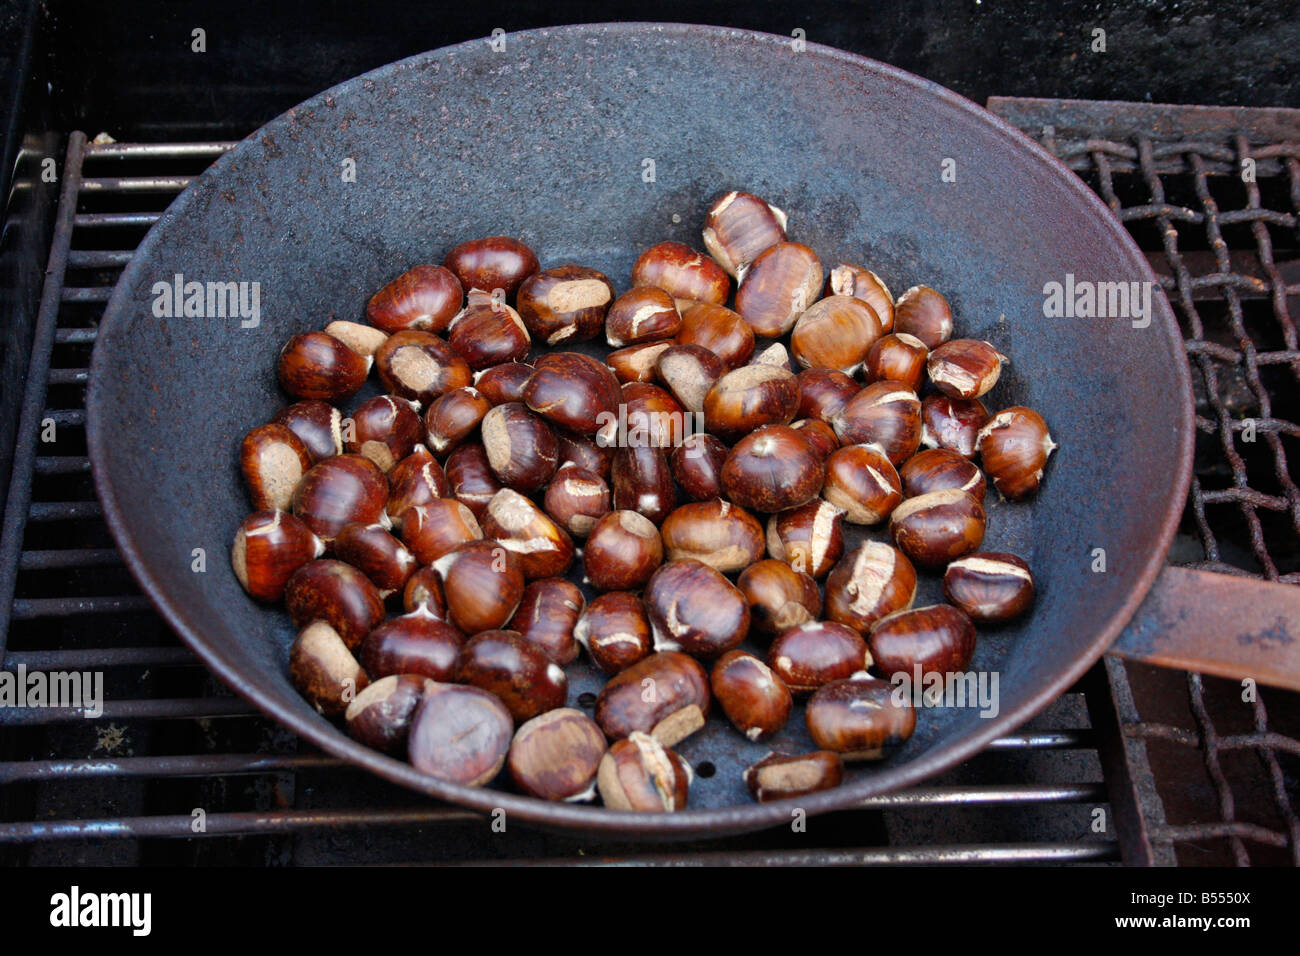 https://c8.alamy.com/comp/B5550X/outdoor-cooking-in-the-autumn-winter-autumn-fruit-chestnut-autumn-B5550X.jpg